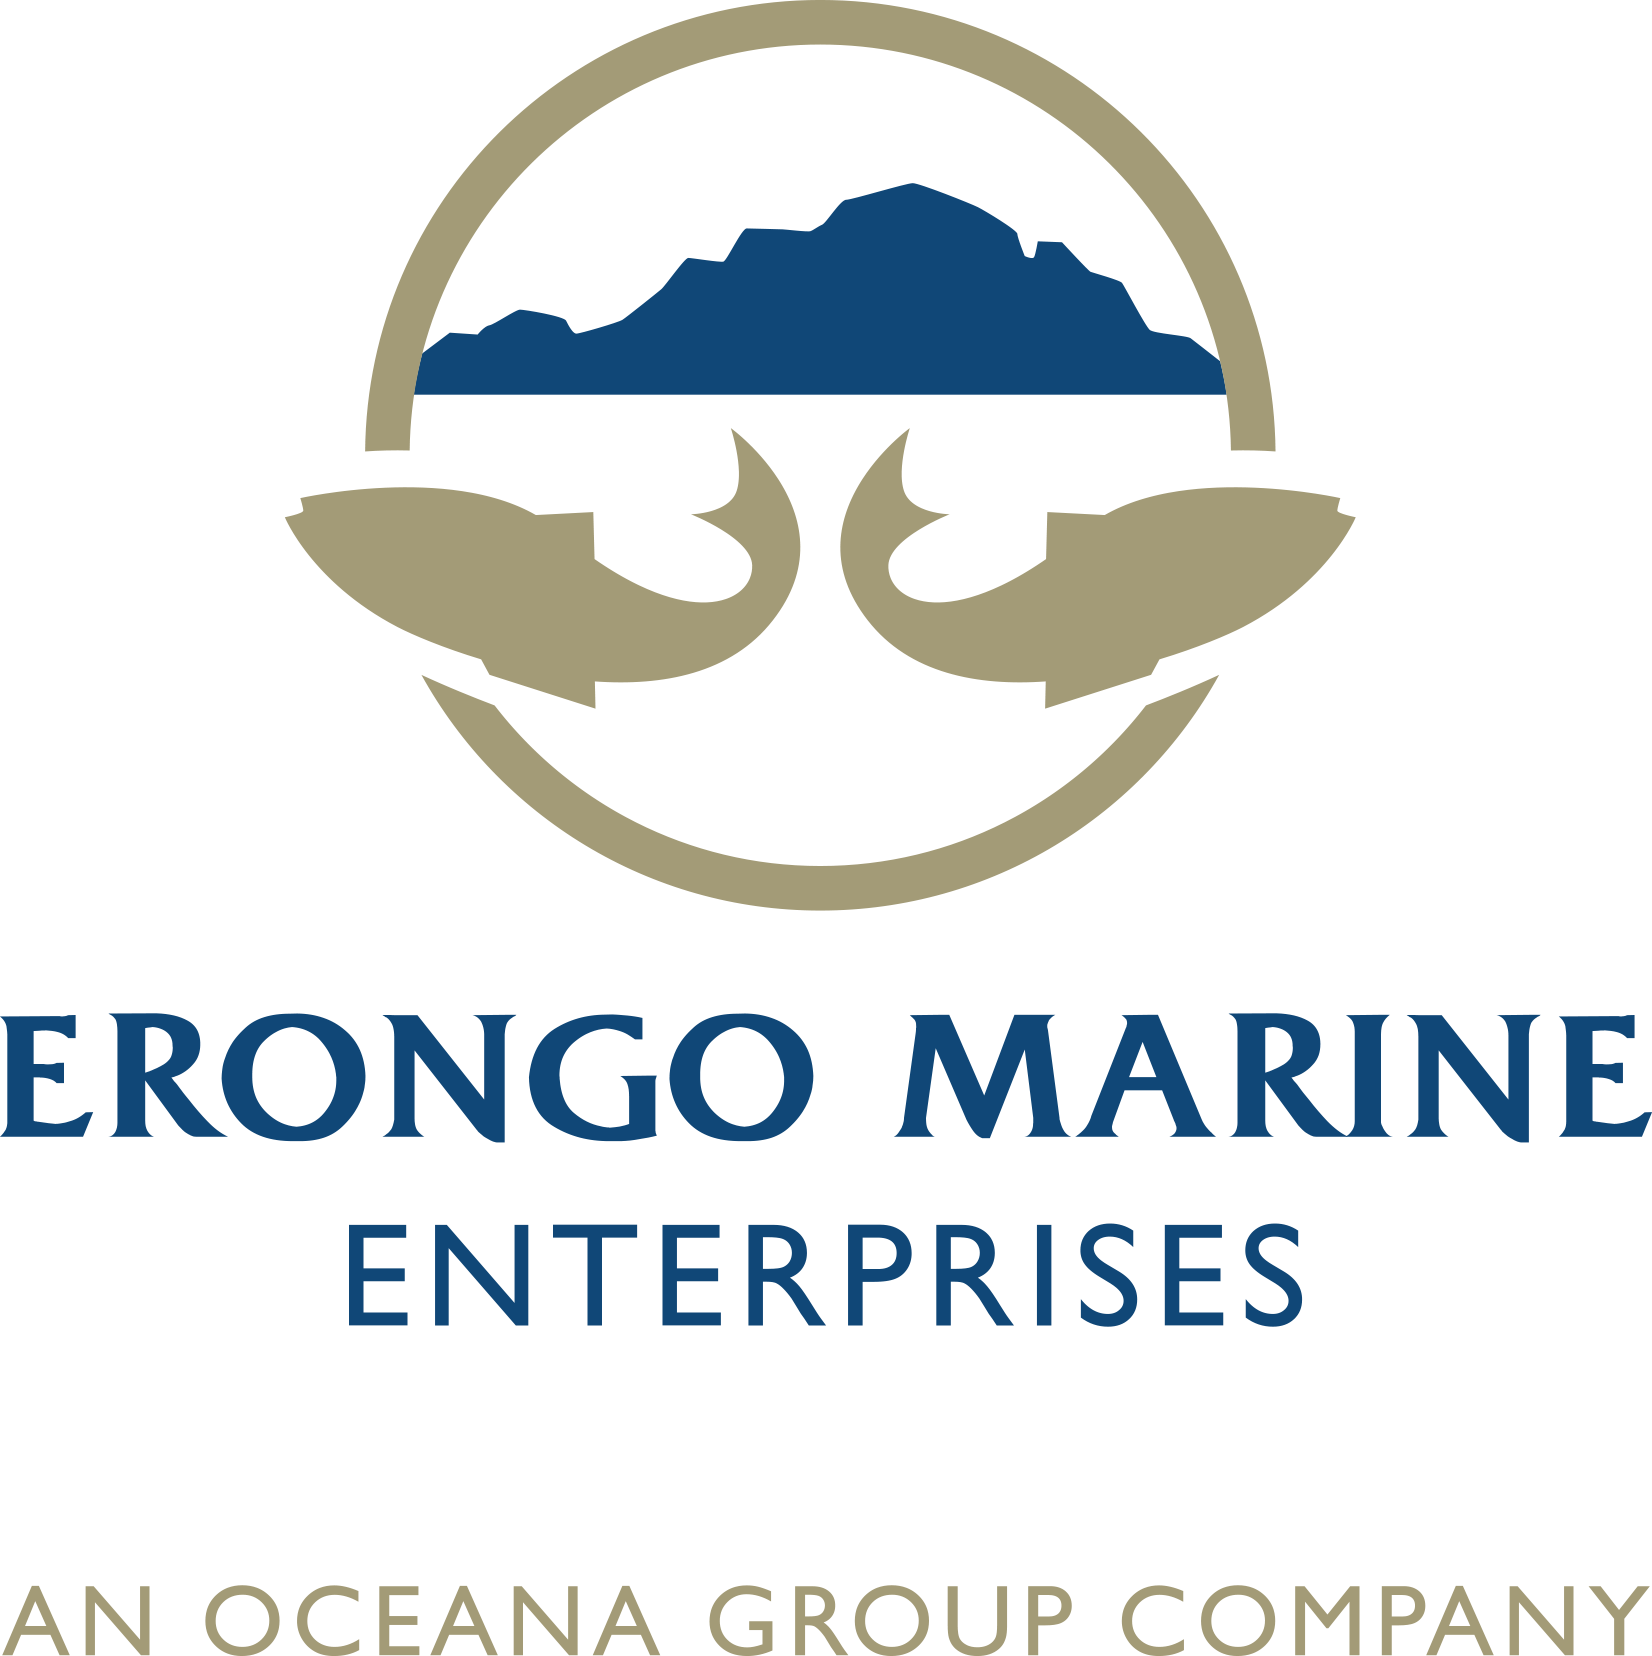 Erongo Marine Enterprises